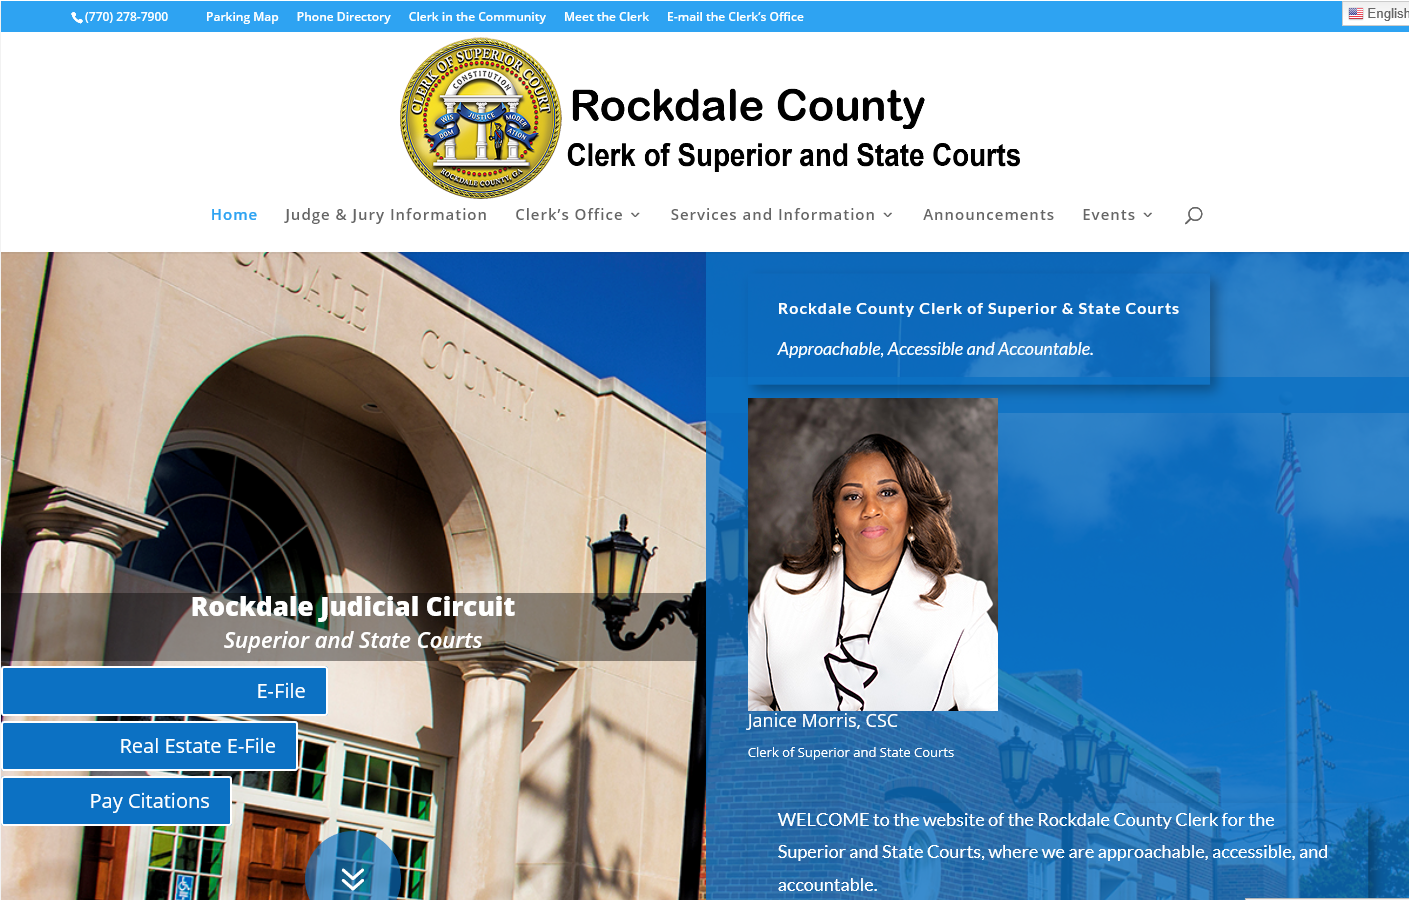 (c) Rockdaleclerk.com